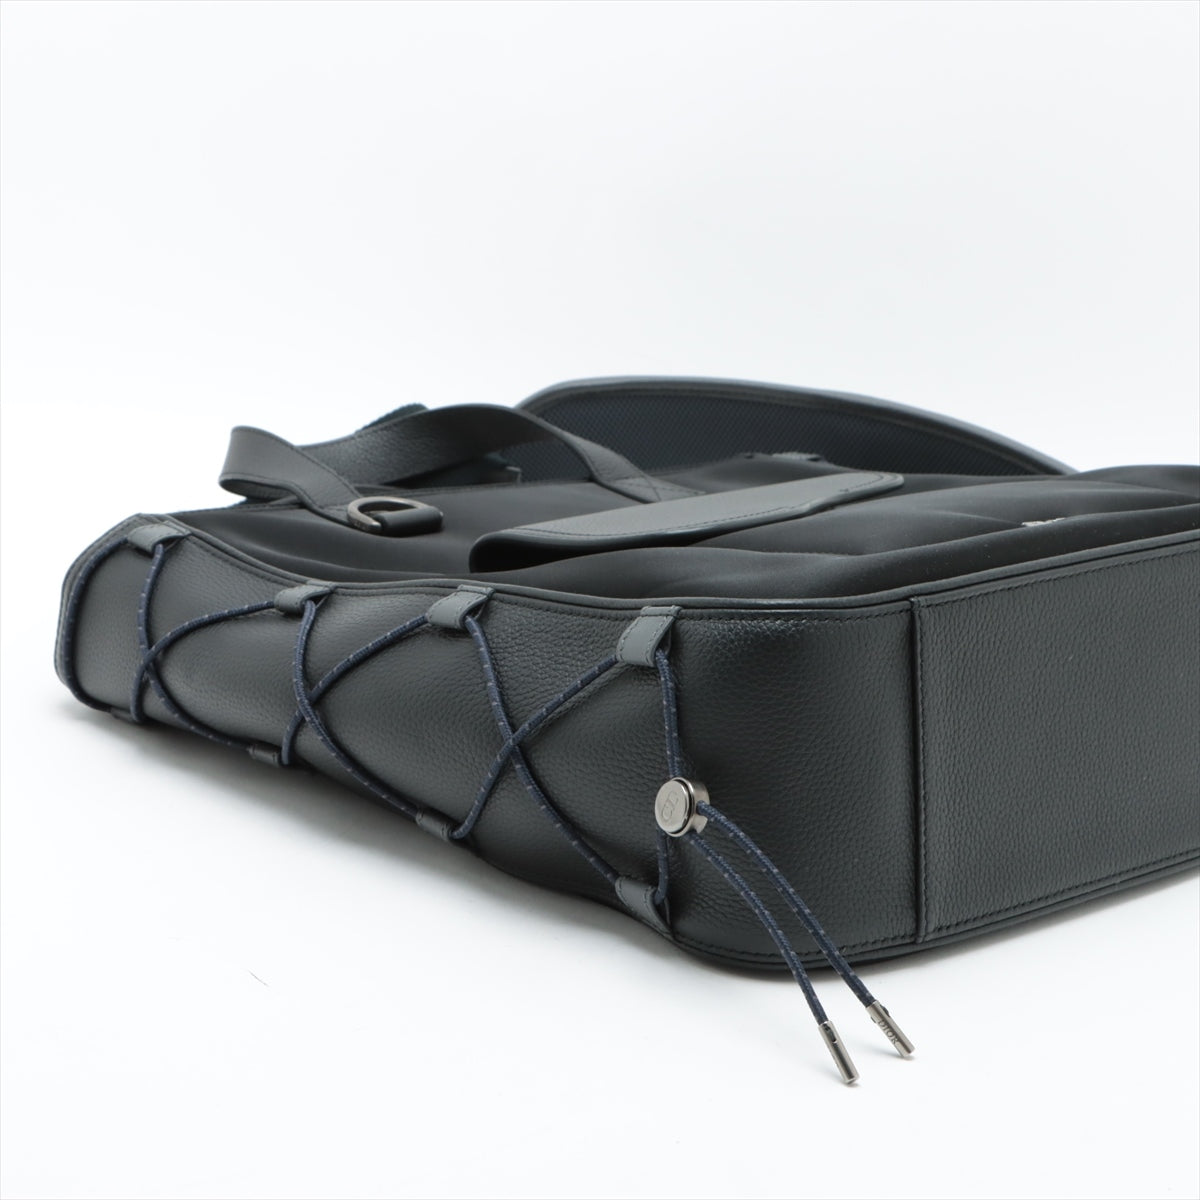 Dior x Sakai Saddle Nylon & leather Shoulder bag Black   open papers